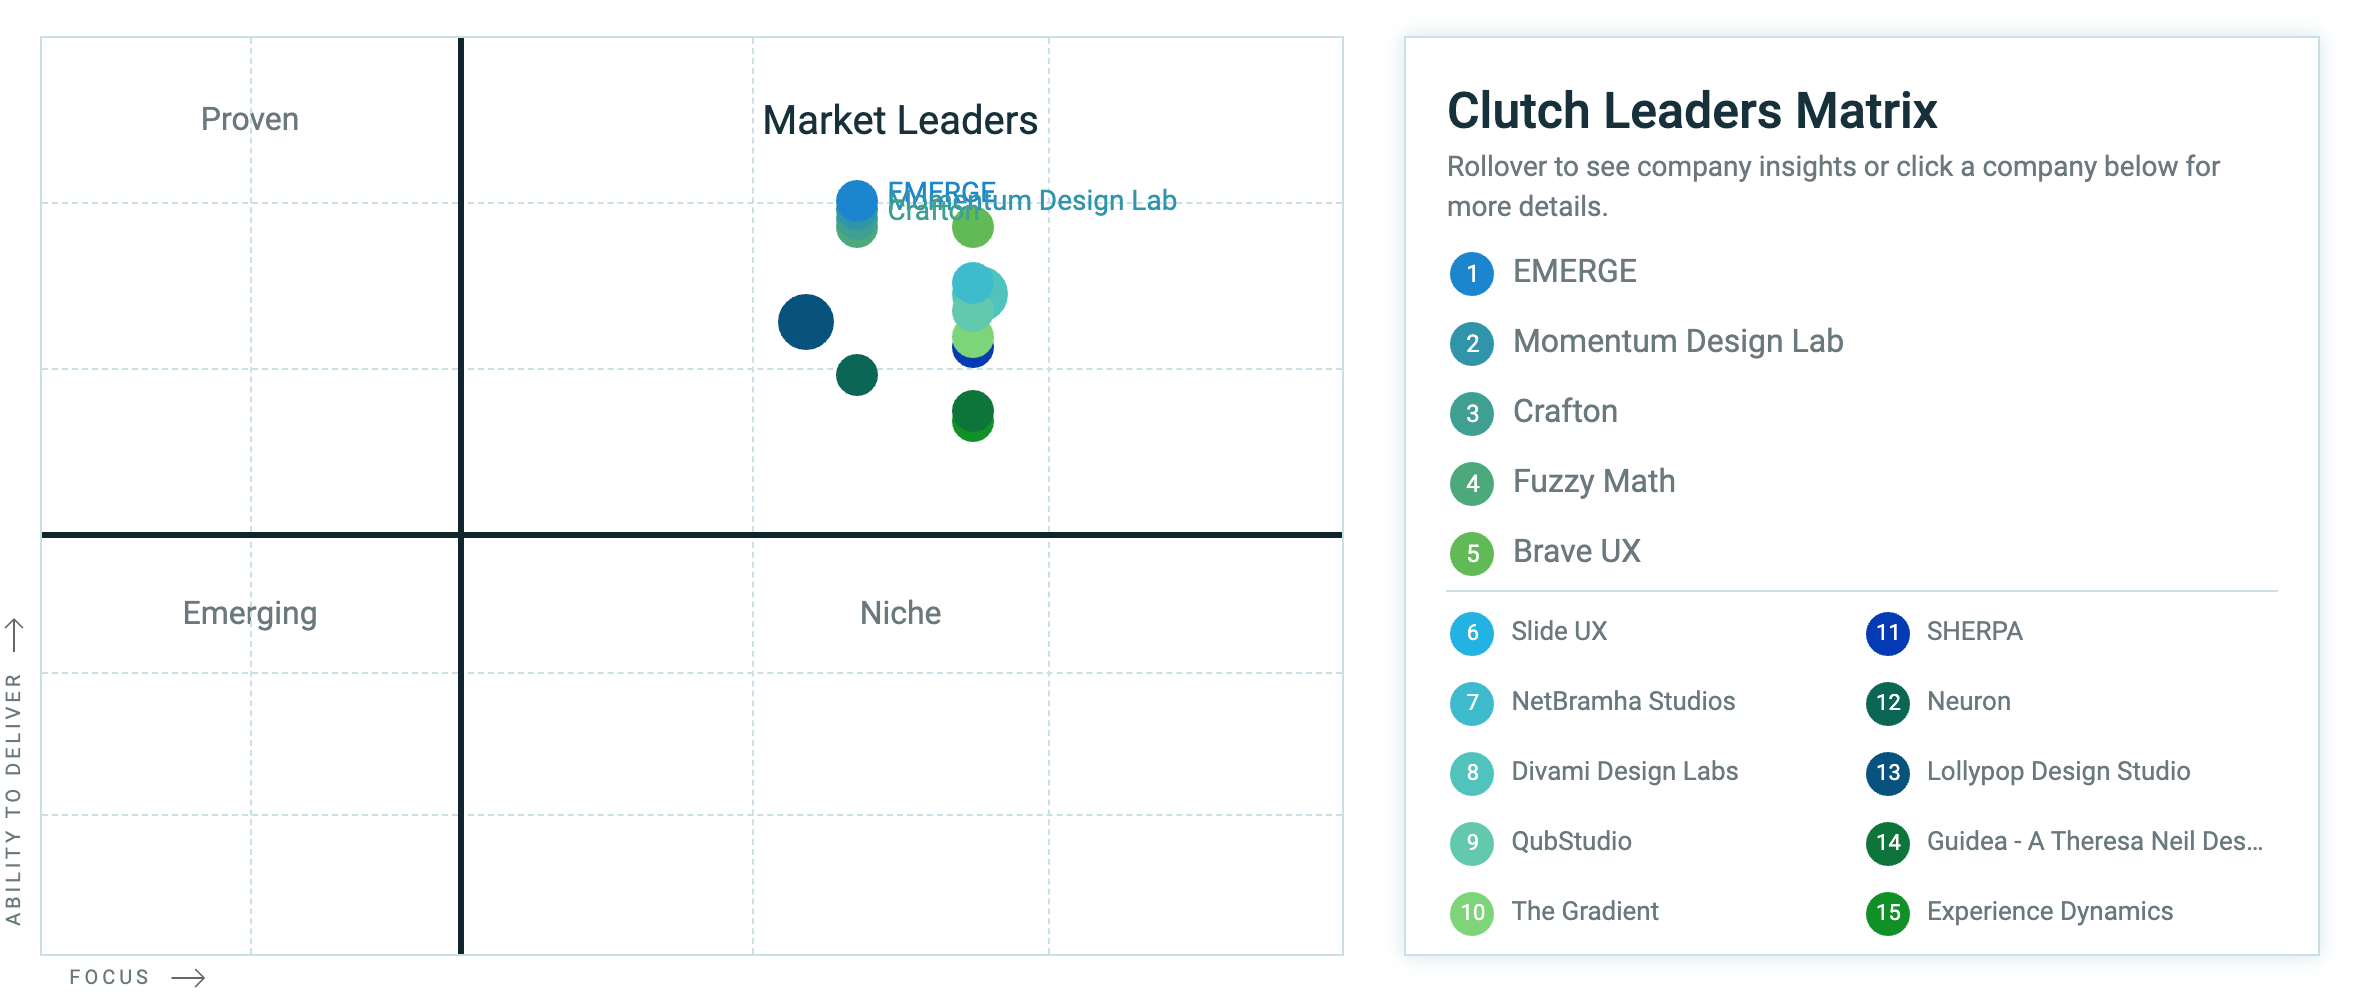 Clutch Leaders Matrix - UX Design